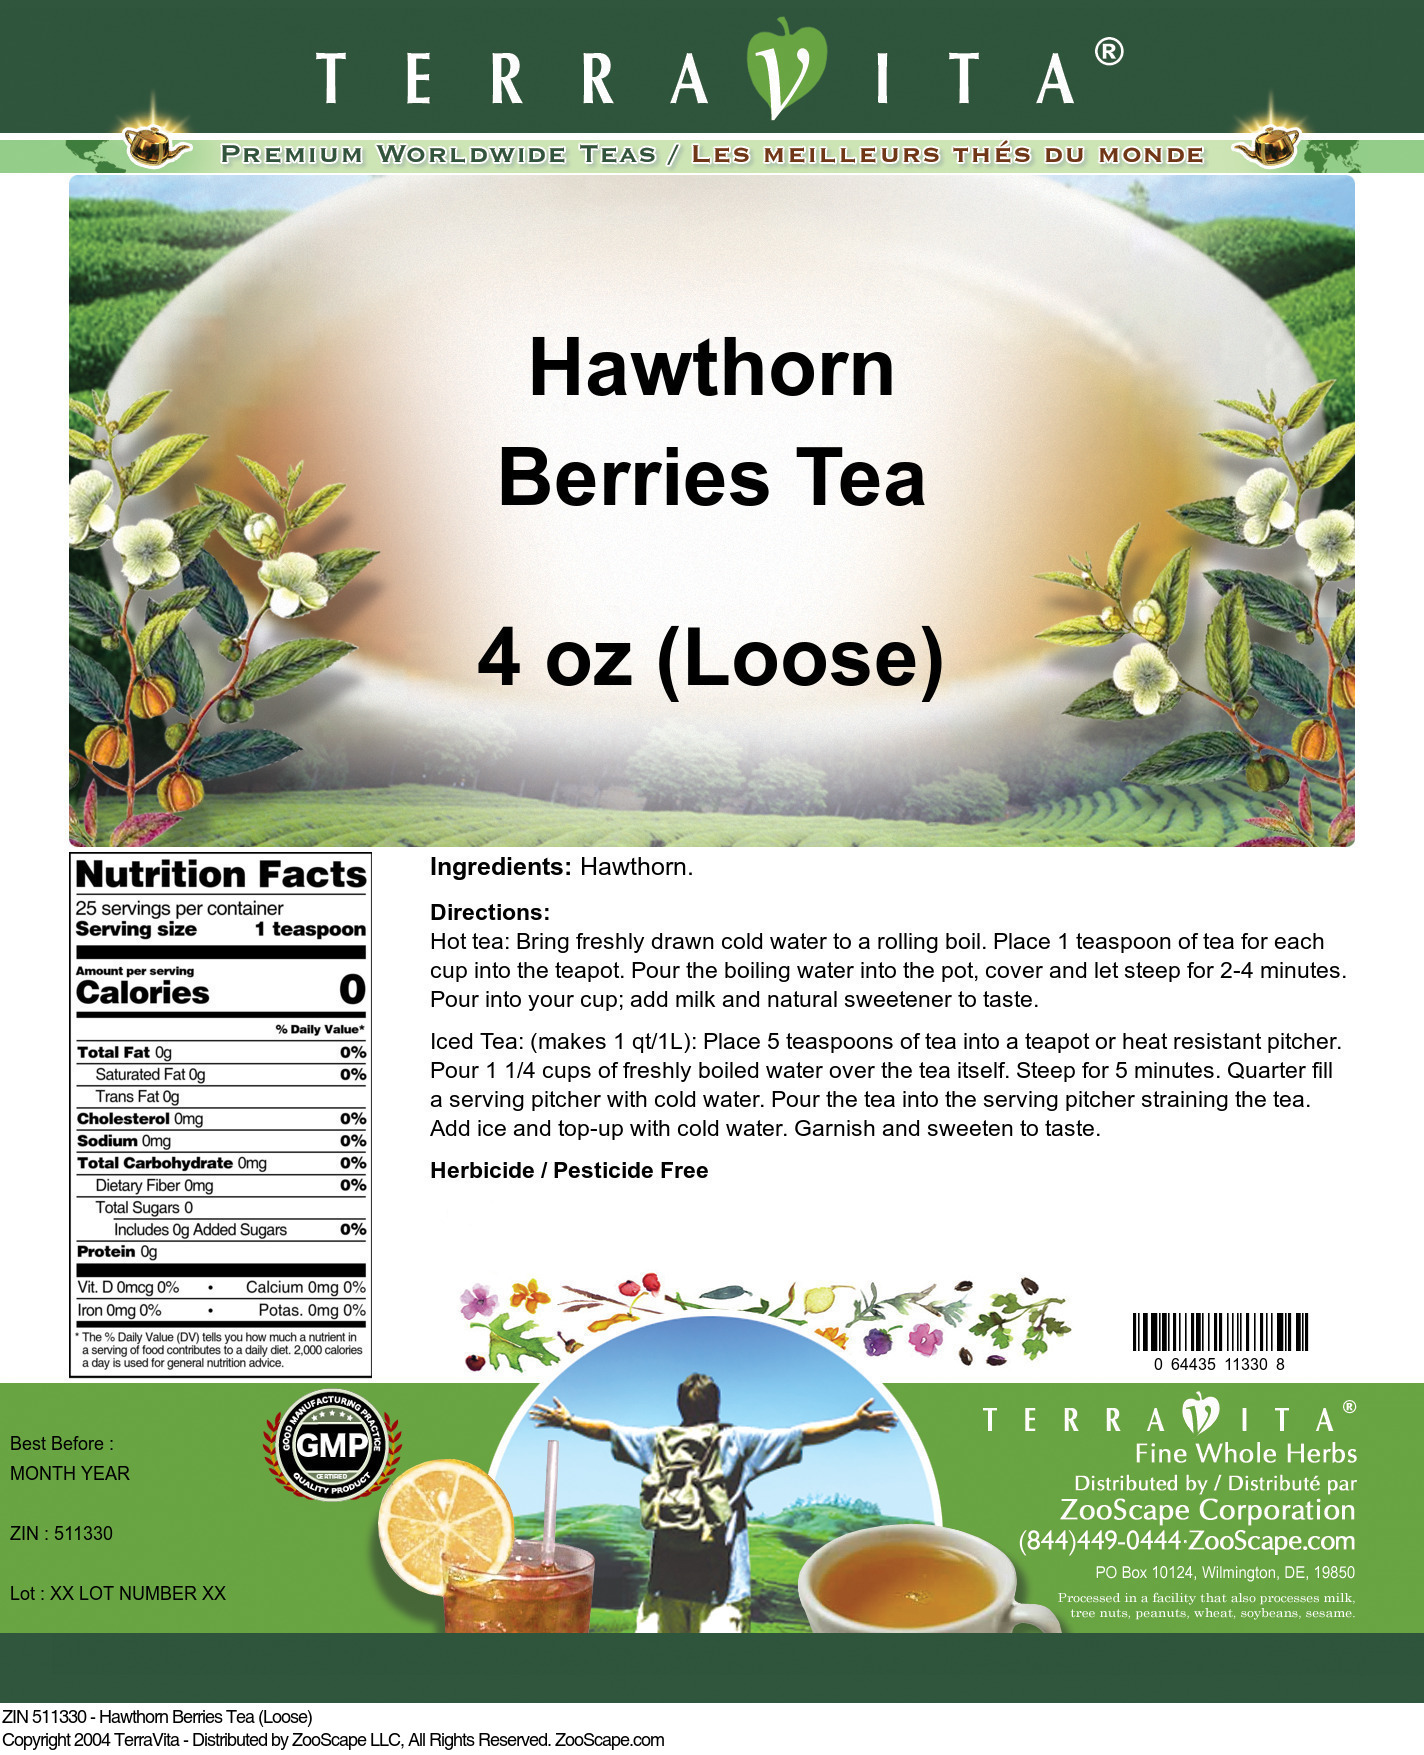 Hawthorn Berries Tea (Loose) - Label